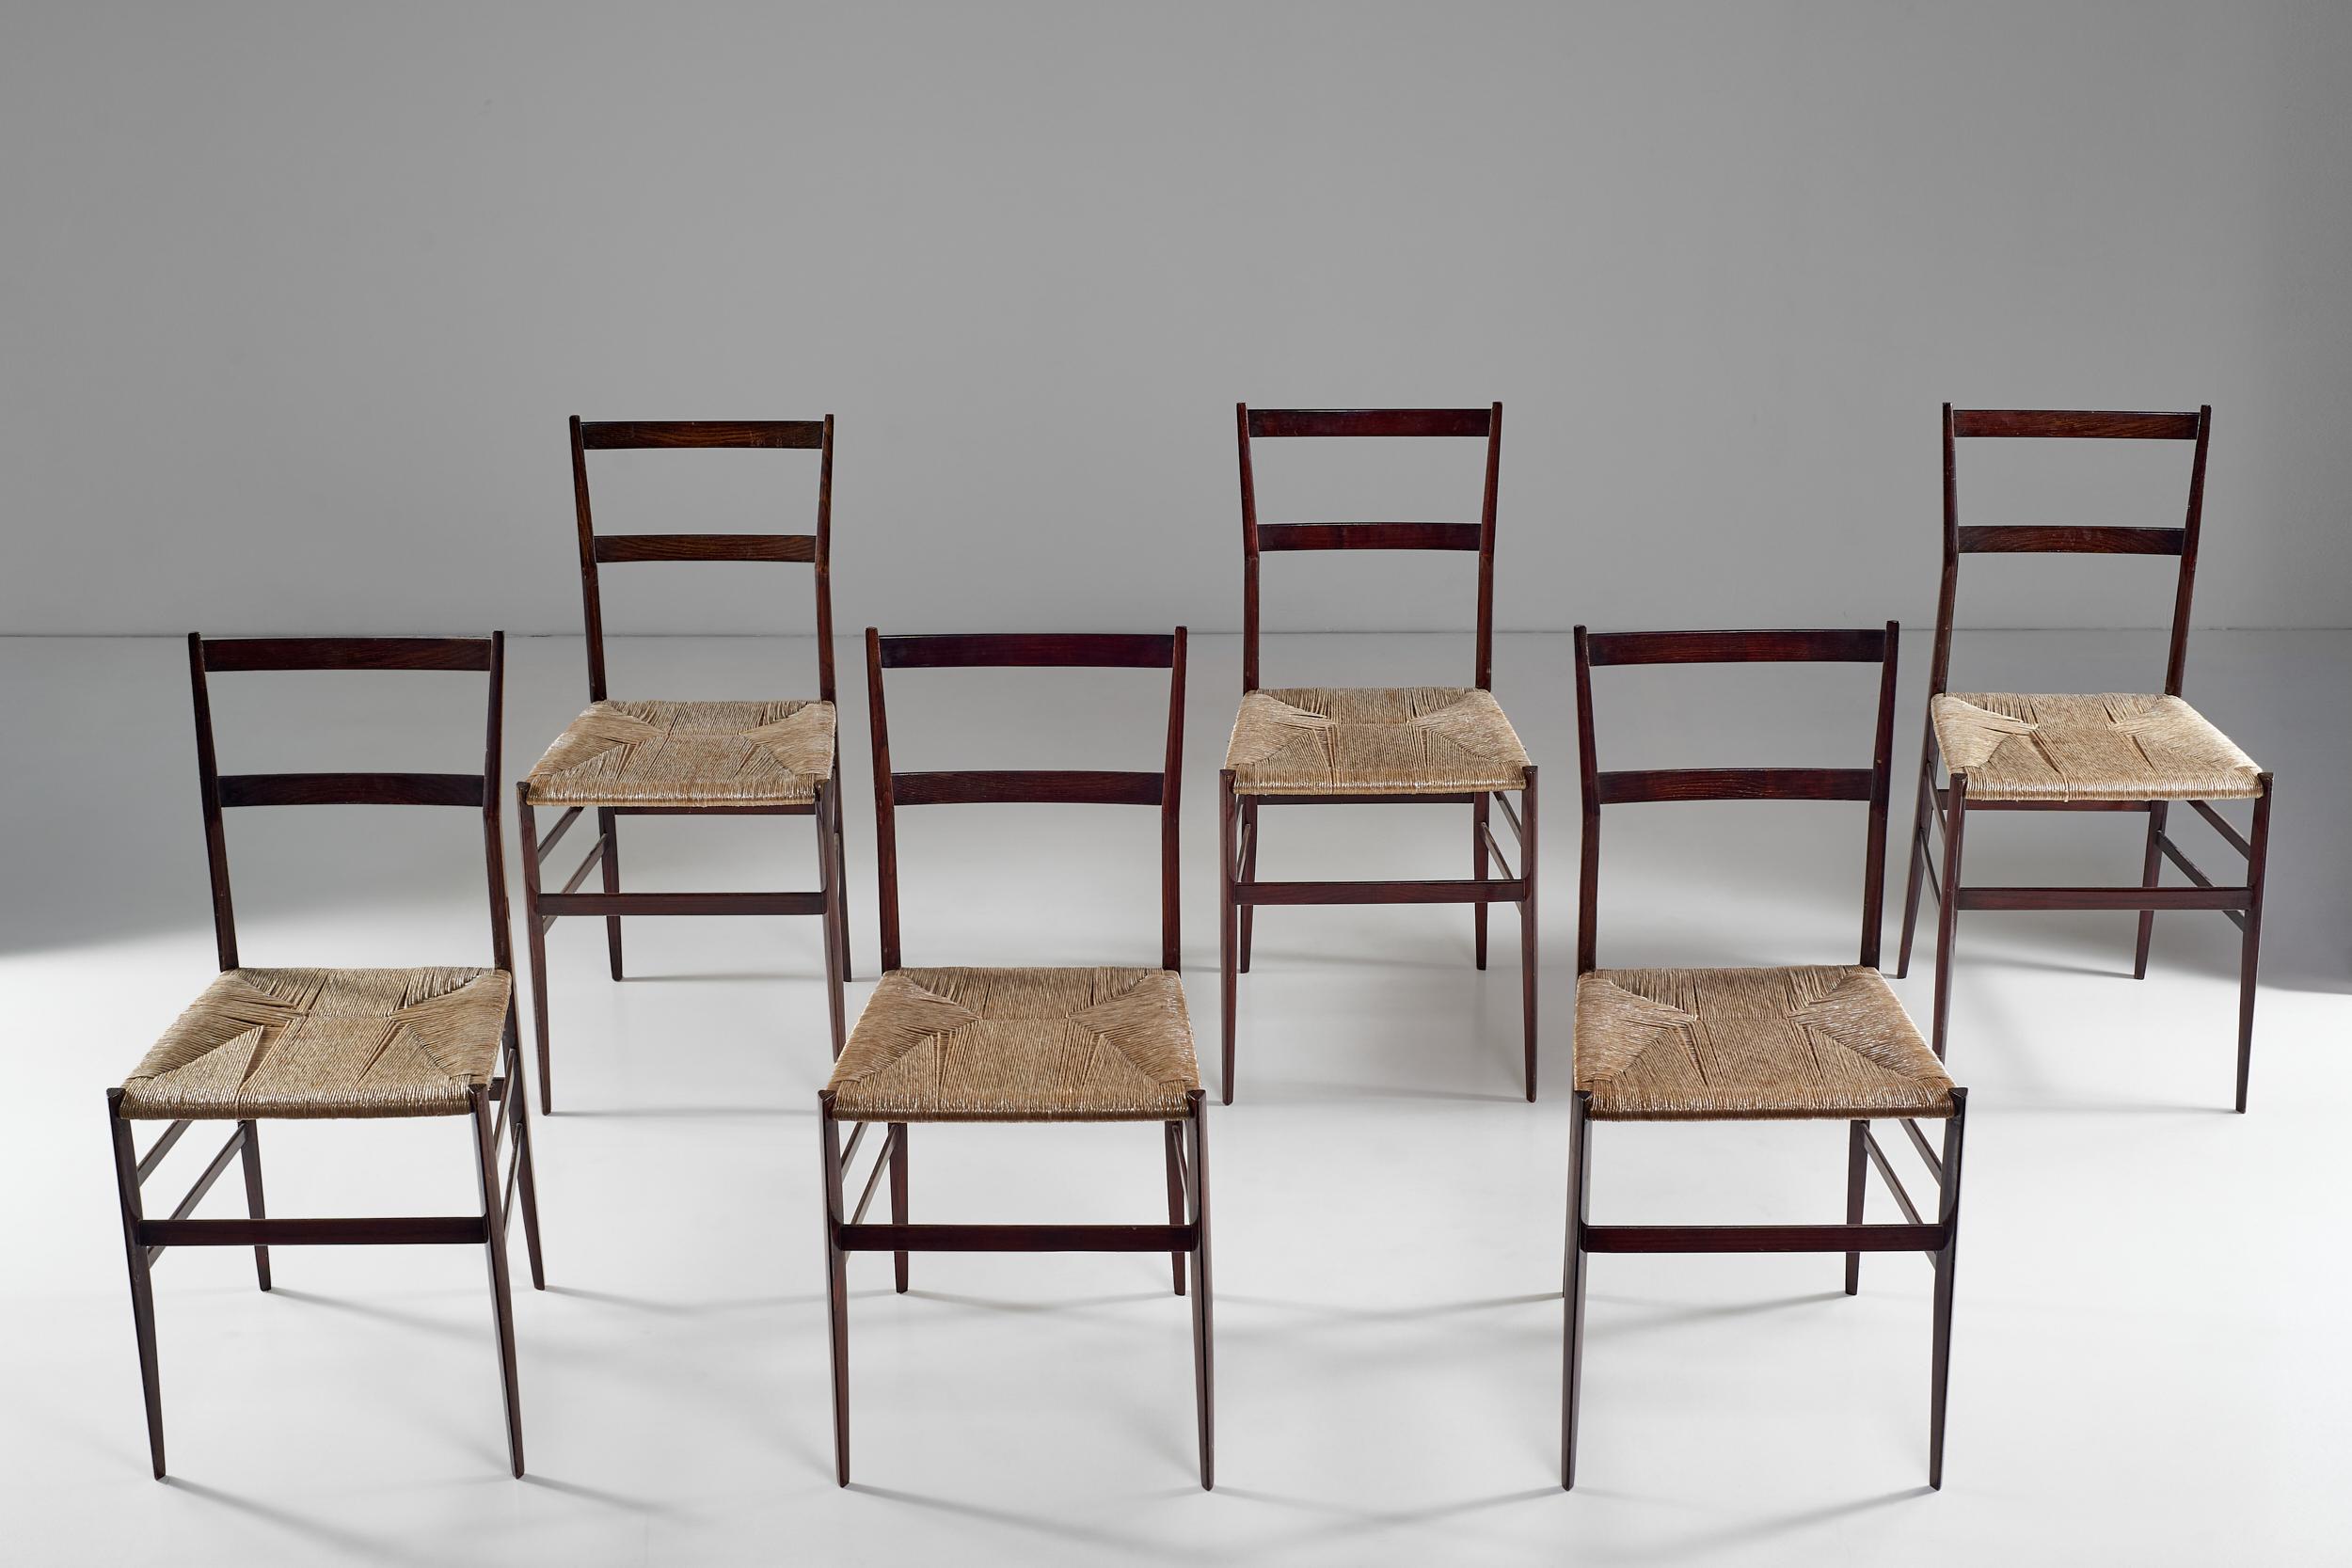 20th Century Gio Ponti Superleggera Set of Six Chairs Italian Design Cassina, 1951